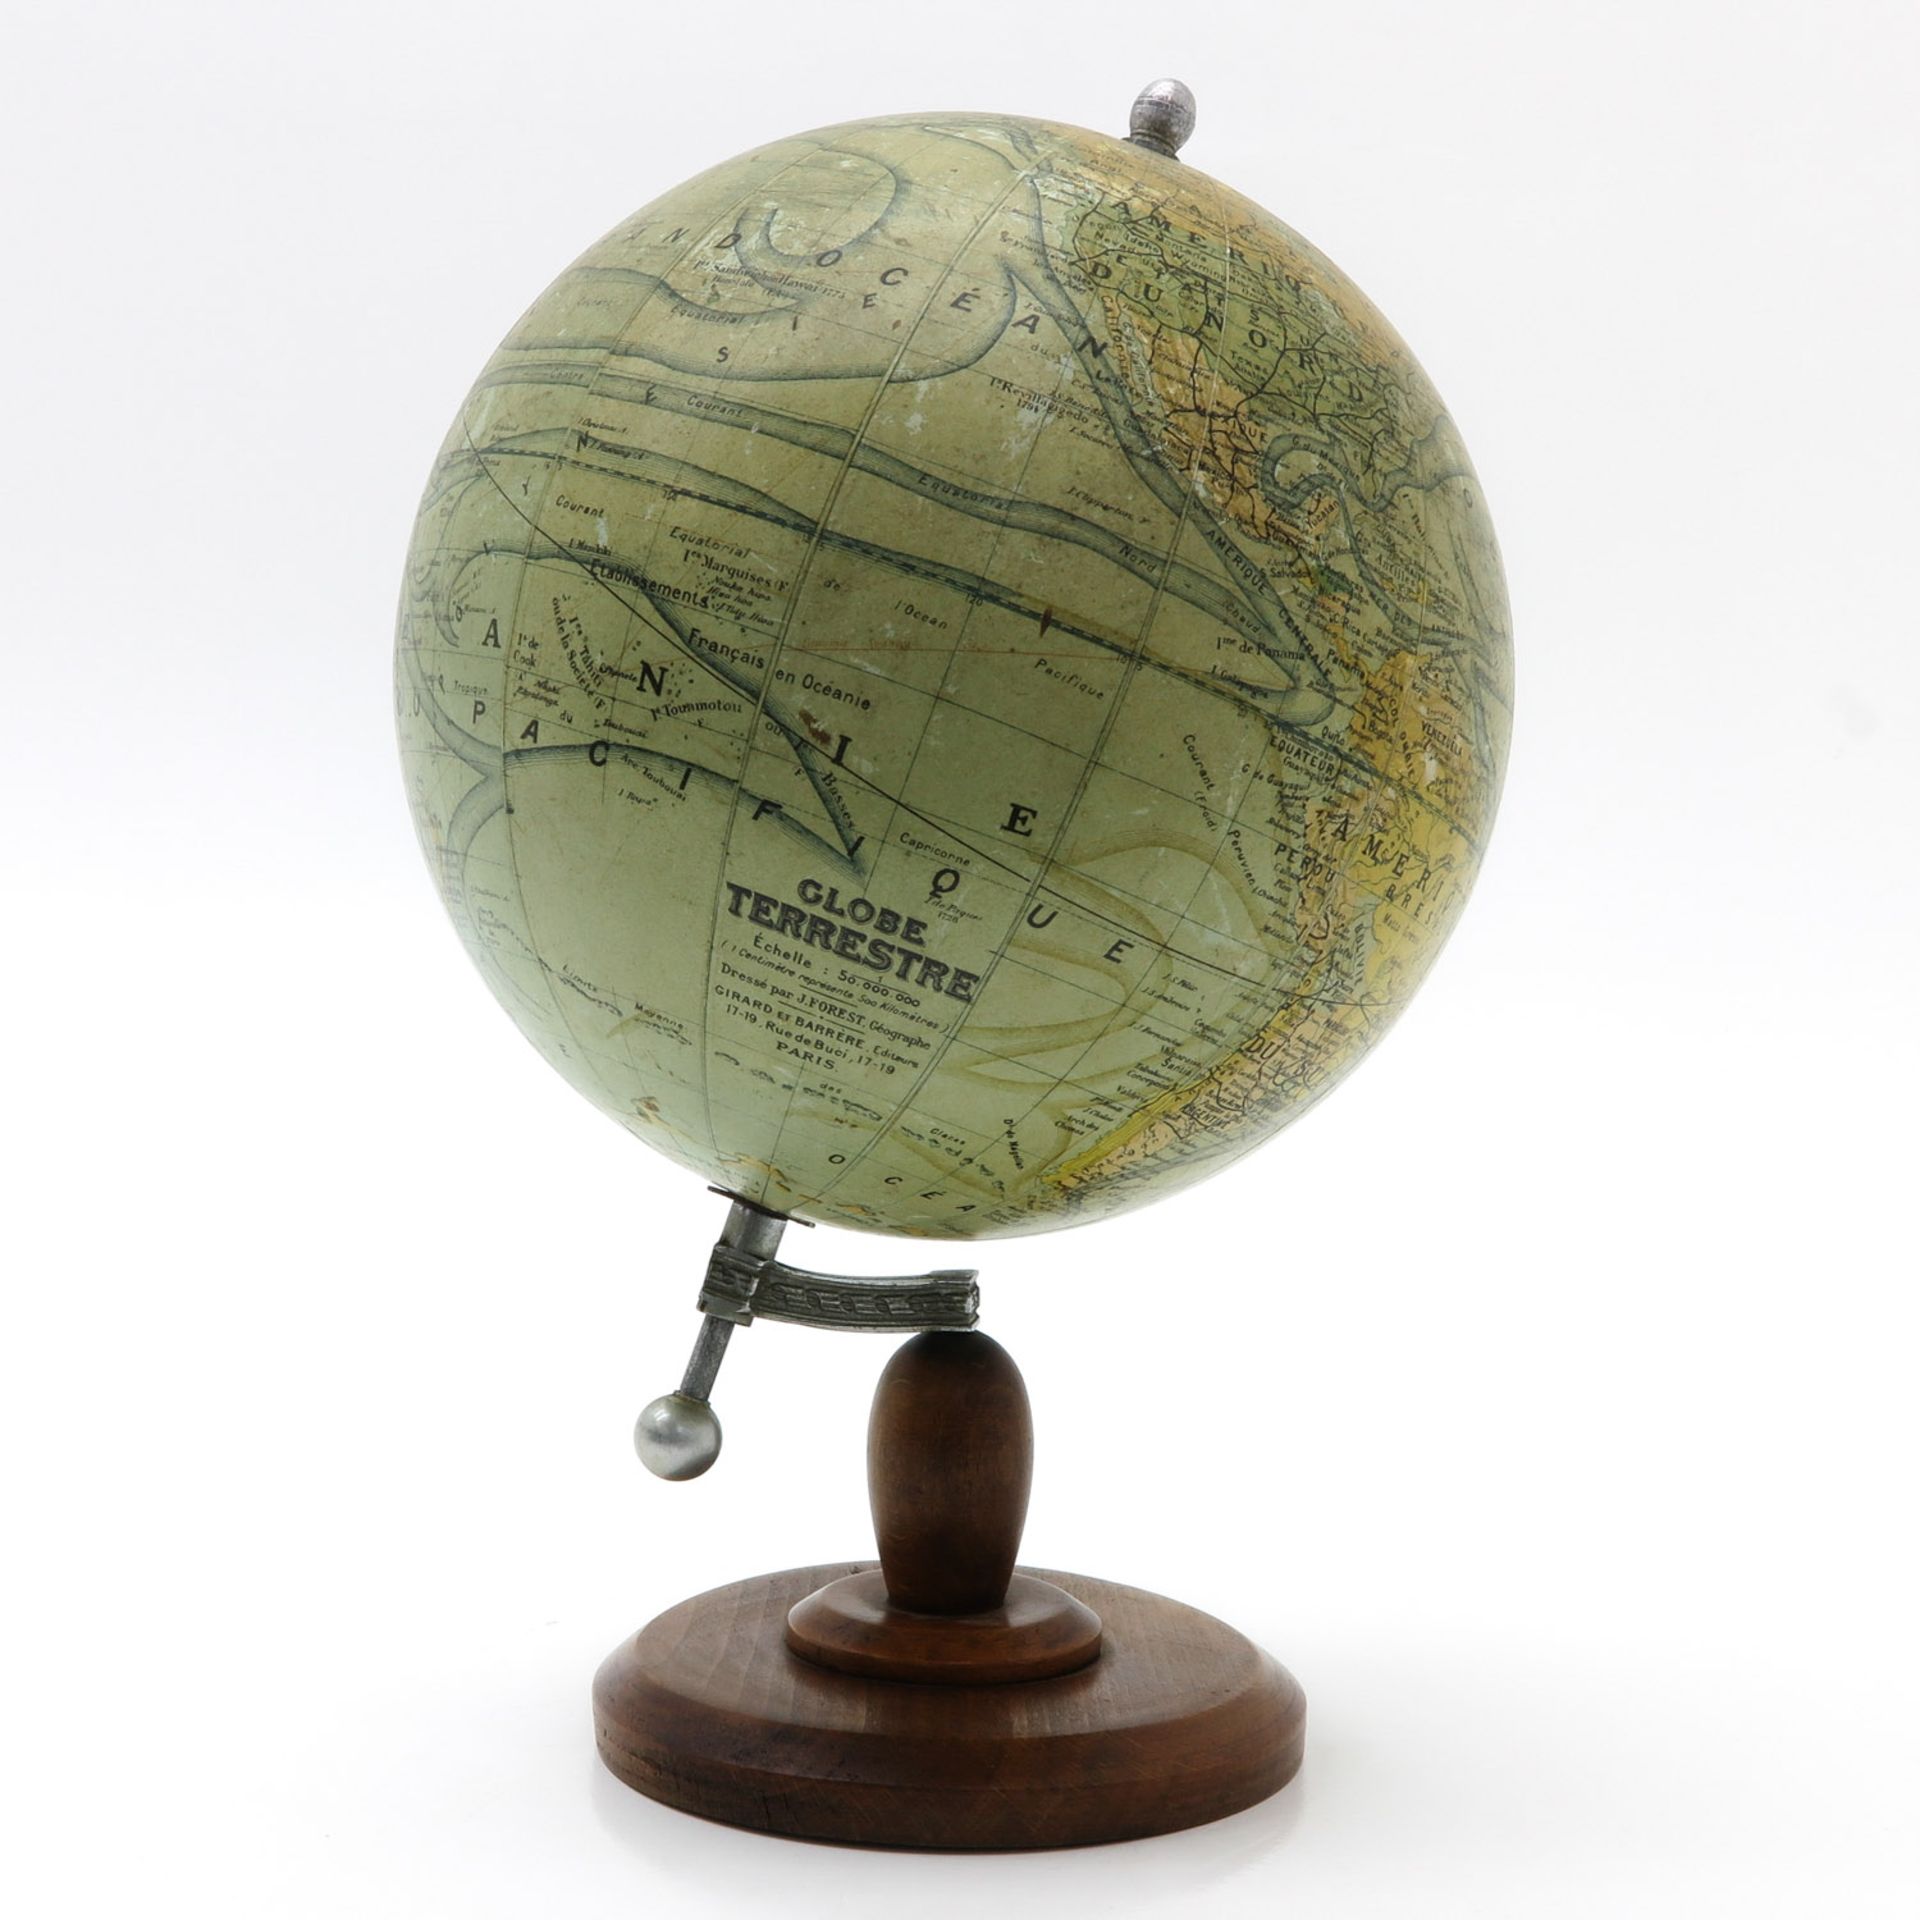 A J. Forest Globe Terrestre Globe 1950